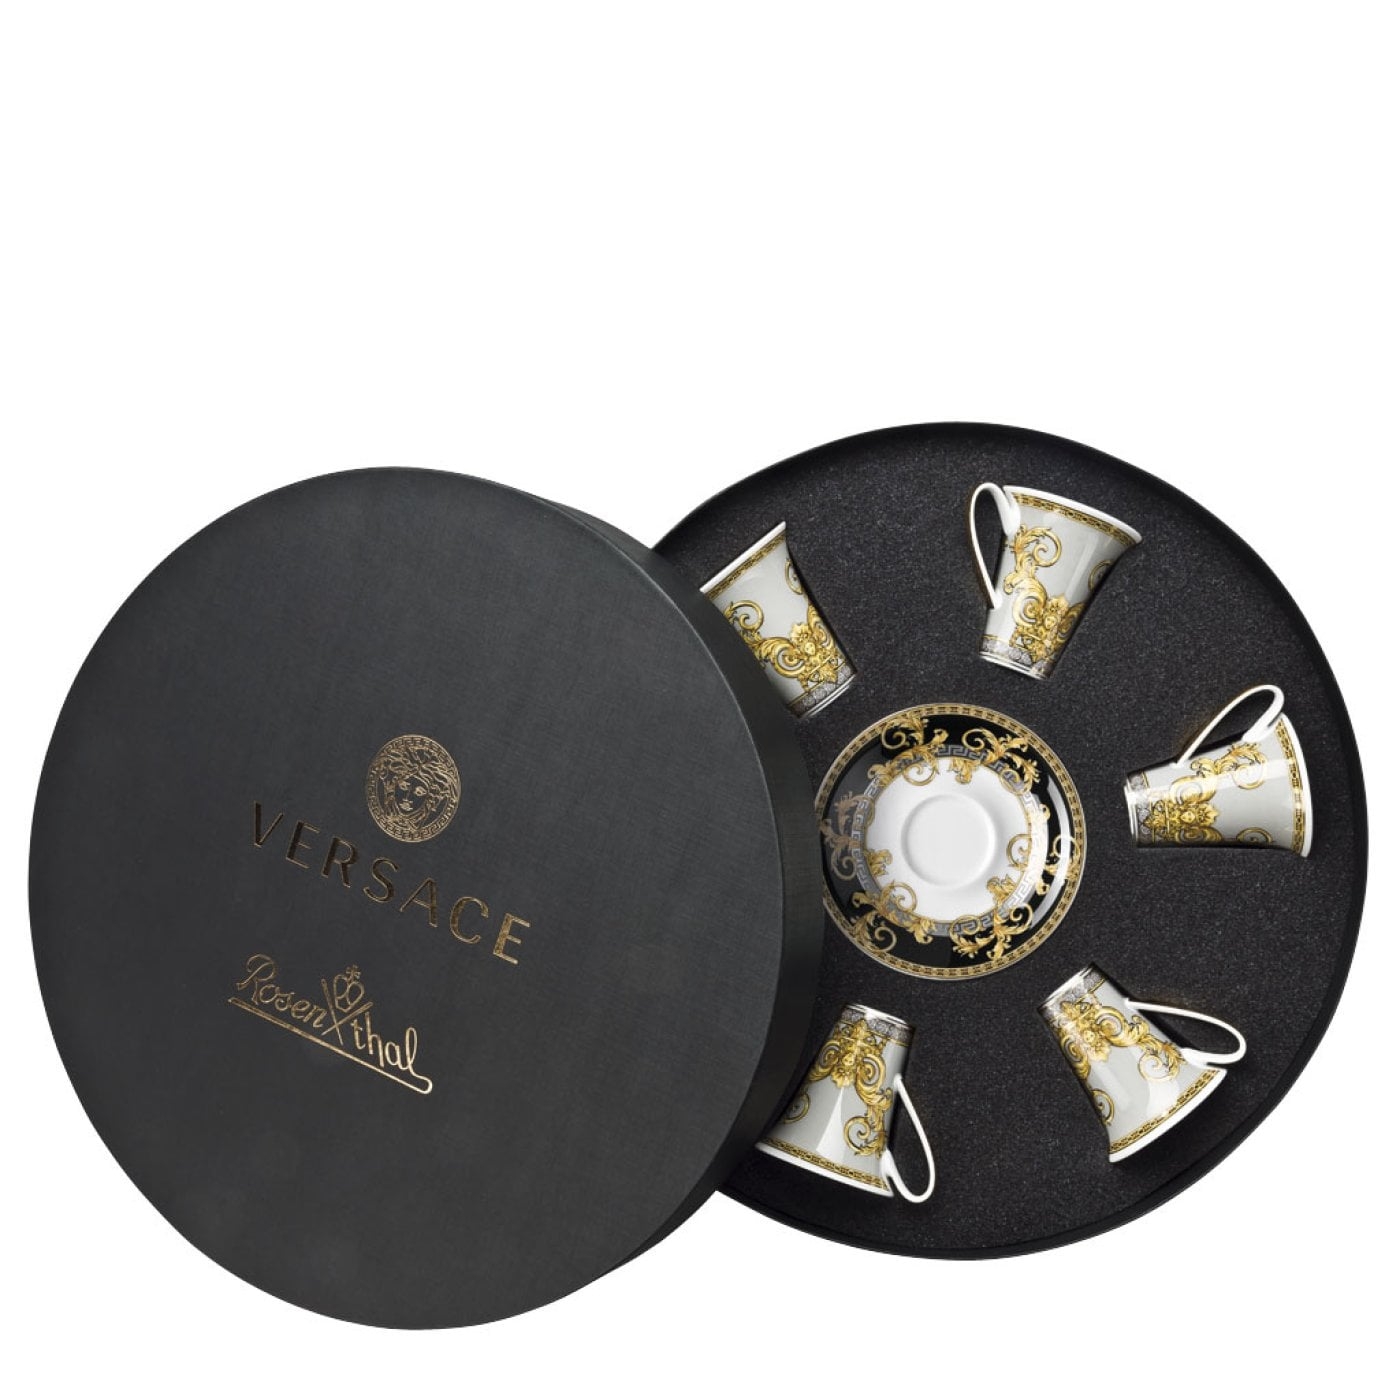 Versace prestige gala set tazze espresso 6 pz